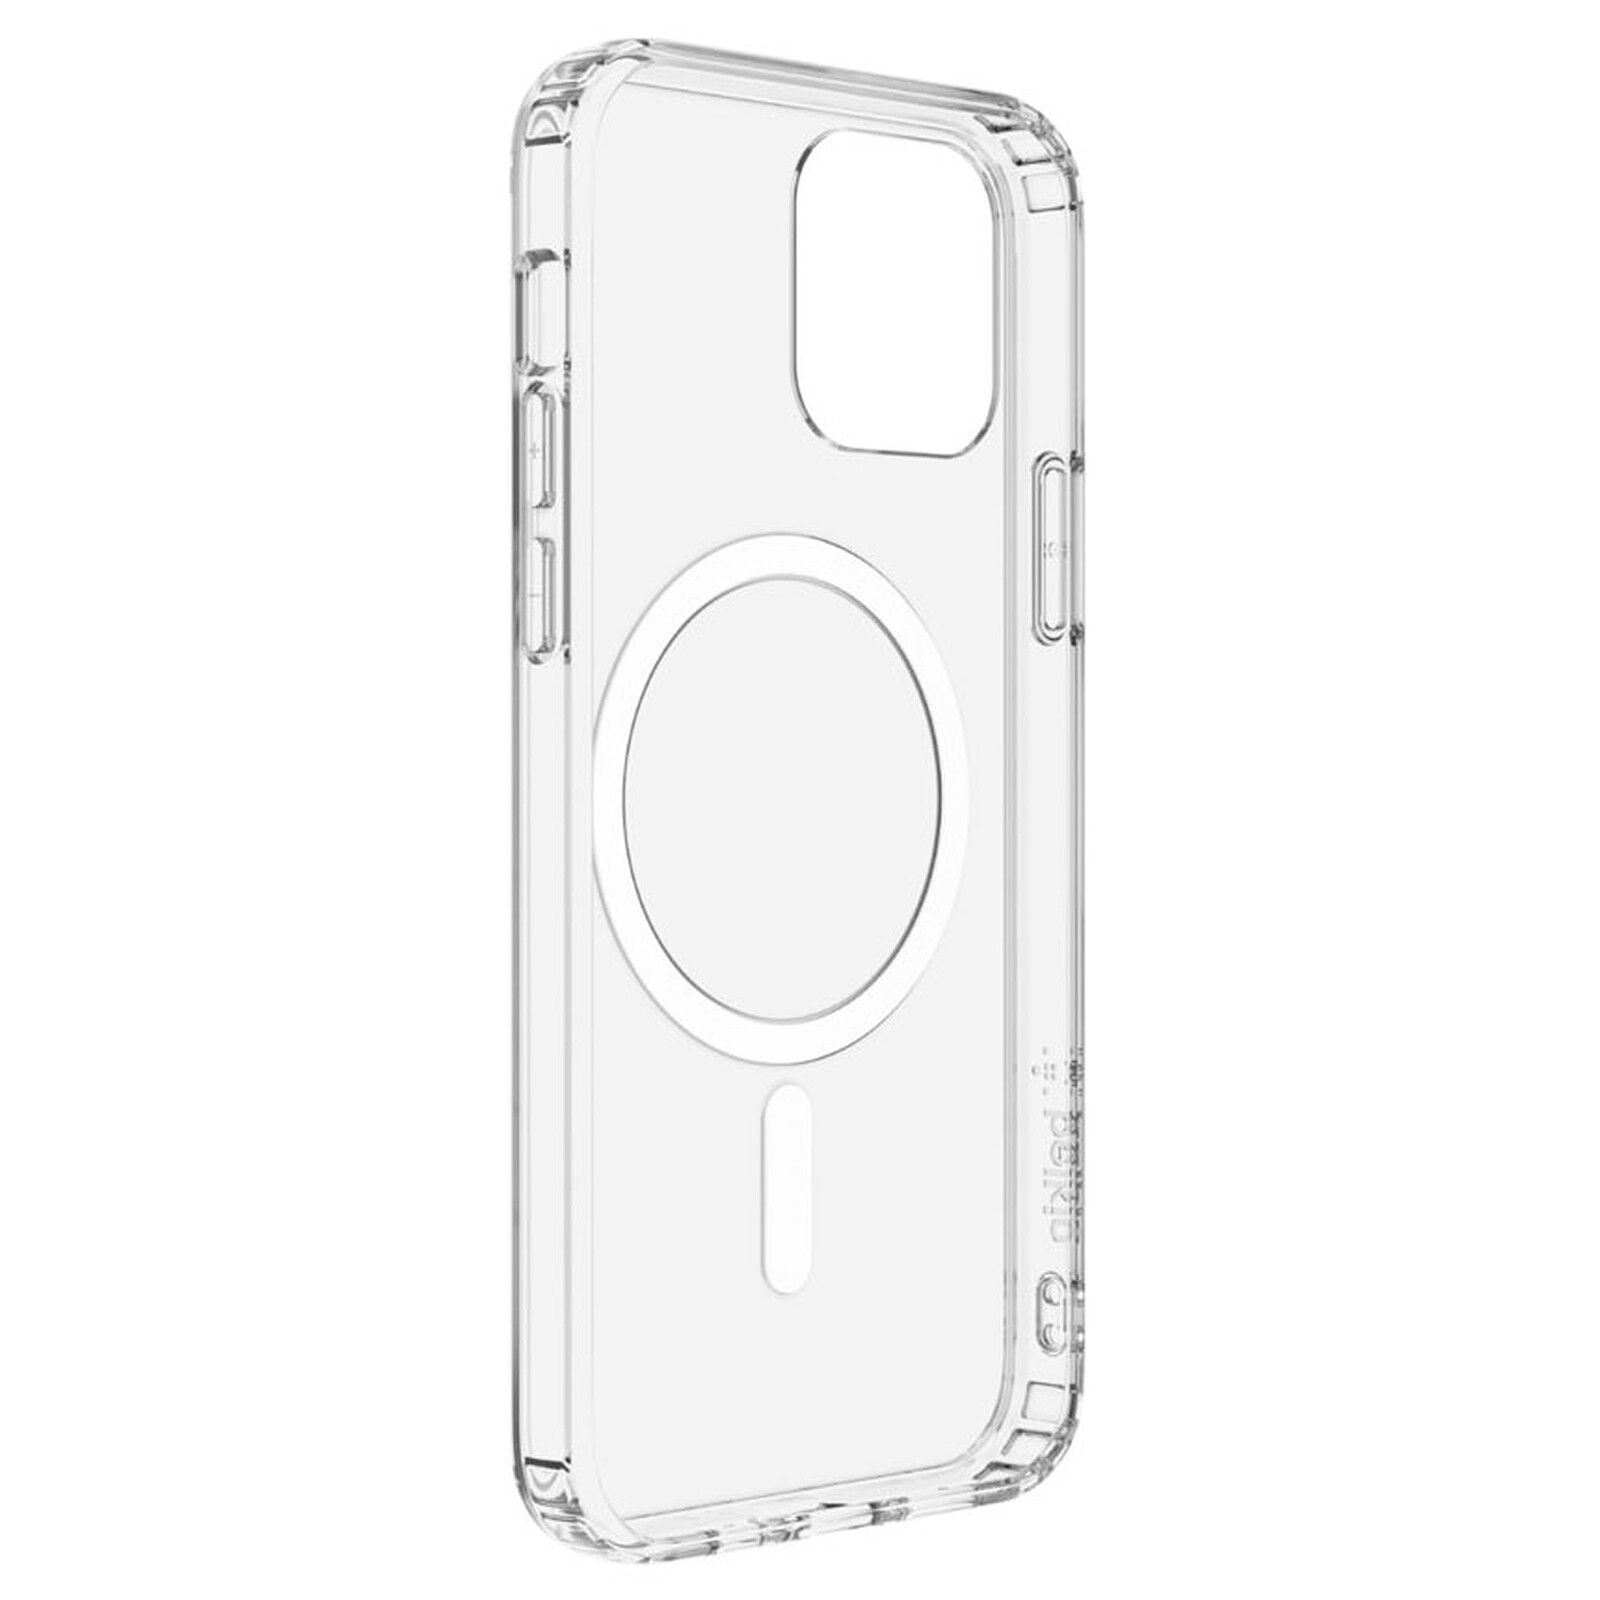 Carcasa MagSafe para iPhone 12 y iPhone 12 Pro transparente